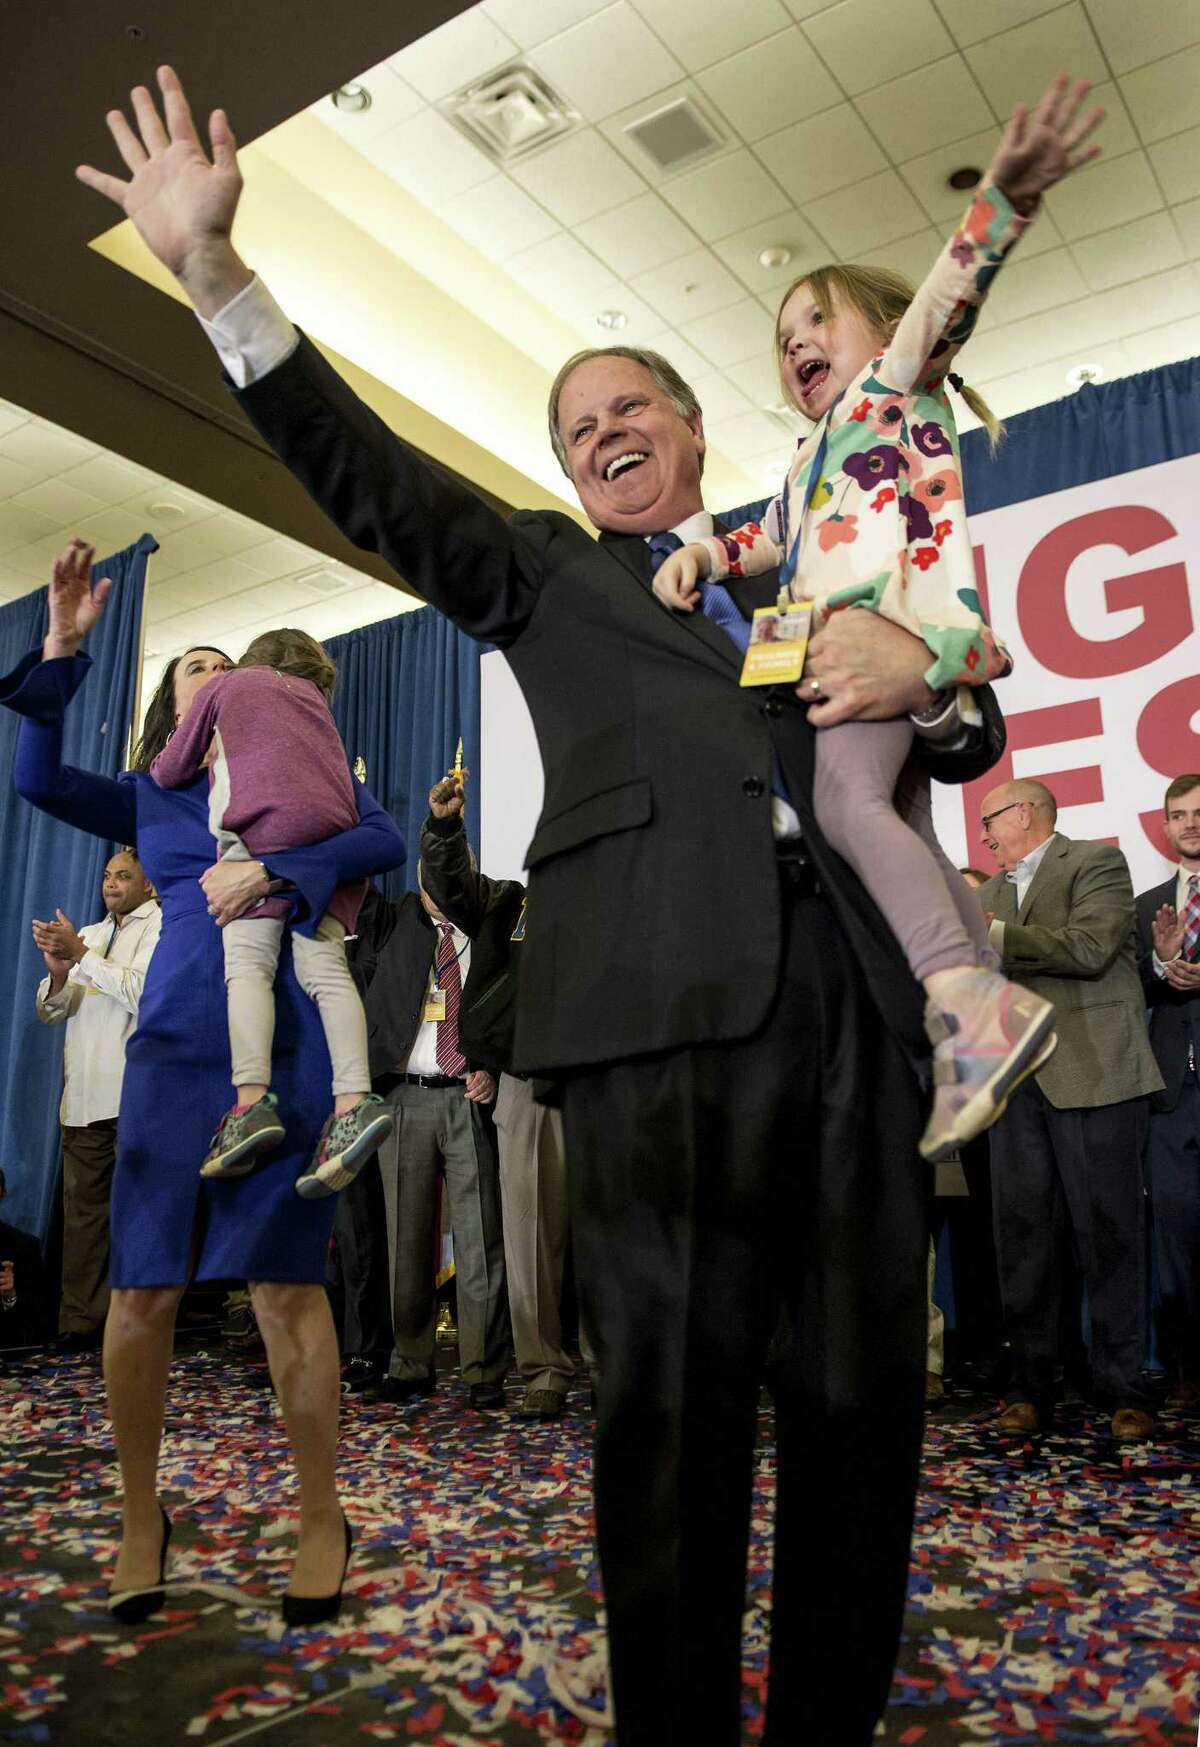 Senator-elect Doug Jones takes the stage after he won the Alabama Special Election for U.S. Senate on Dec. 12, 2017 in Birmingham, Ala.